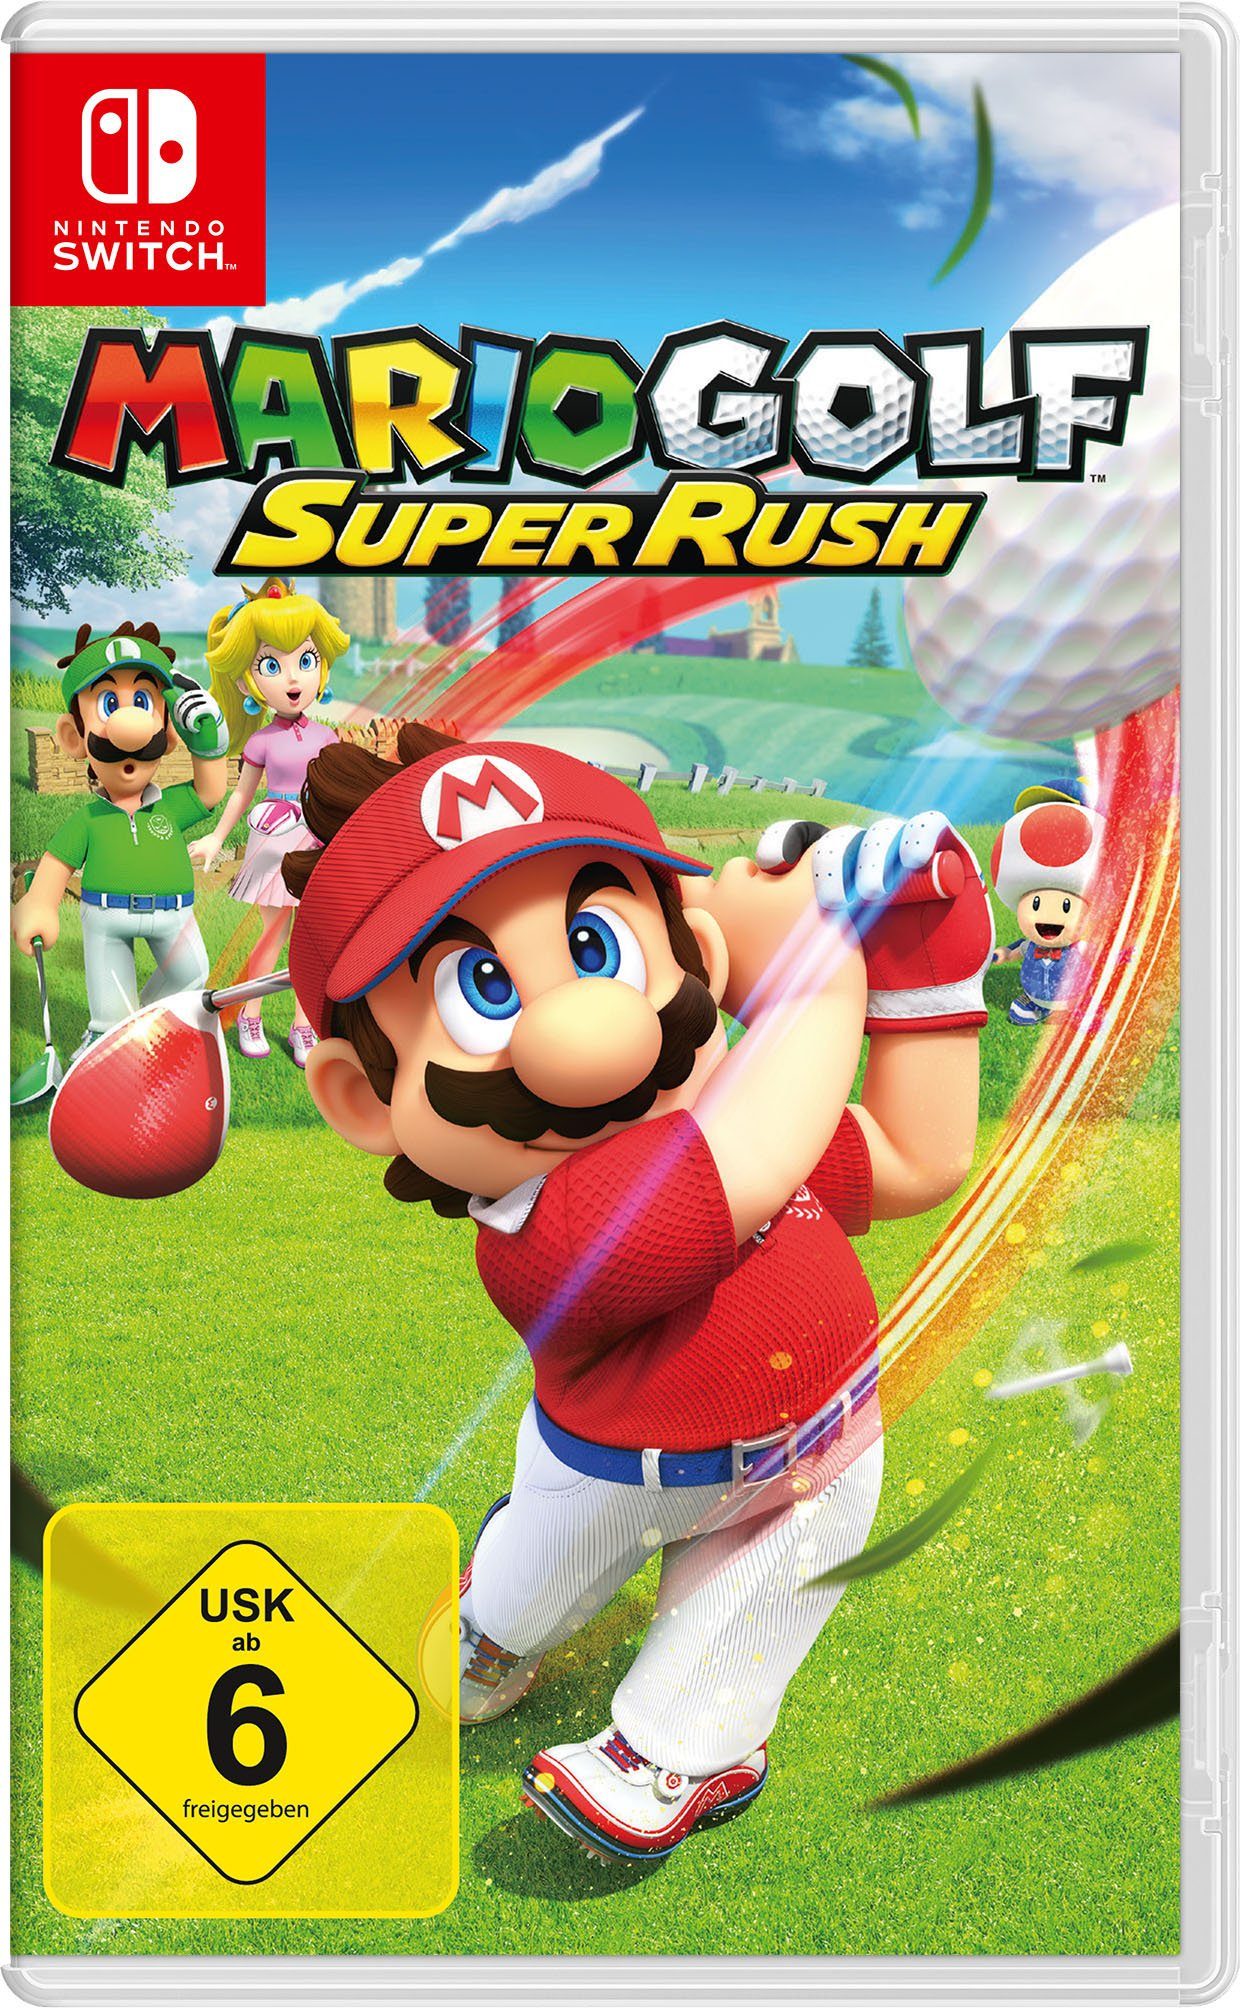 Rush Nintendo Mario Switch Super Golf: